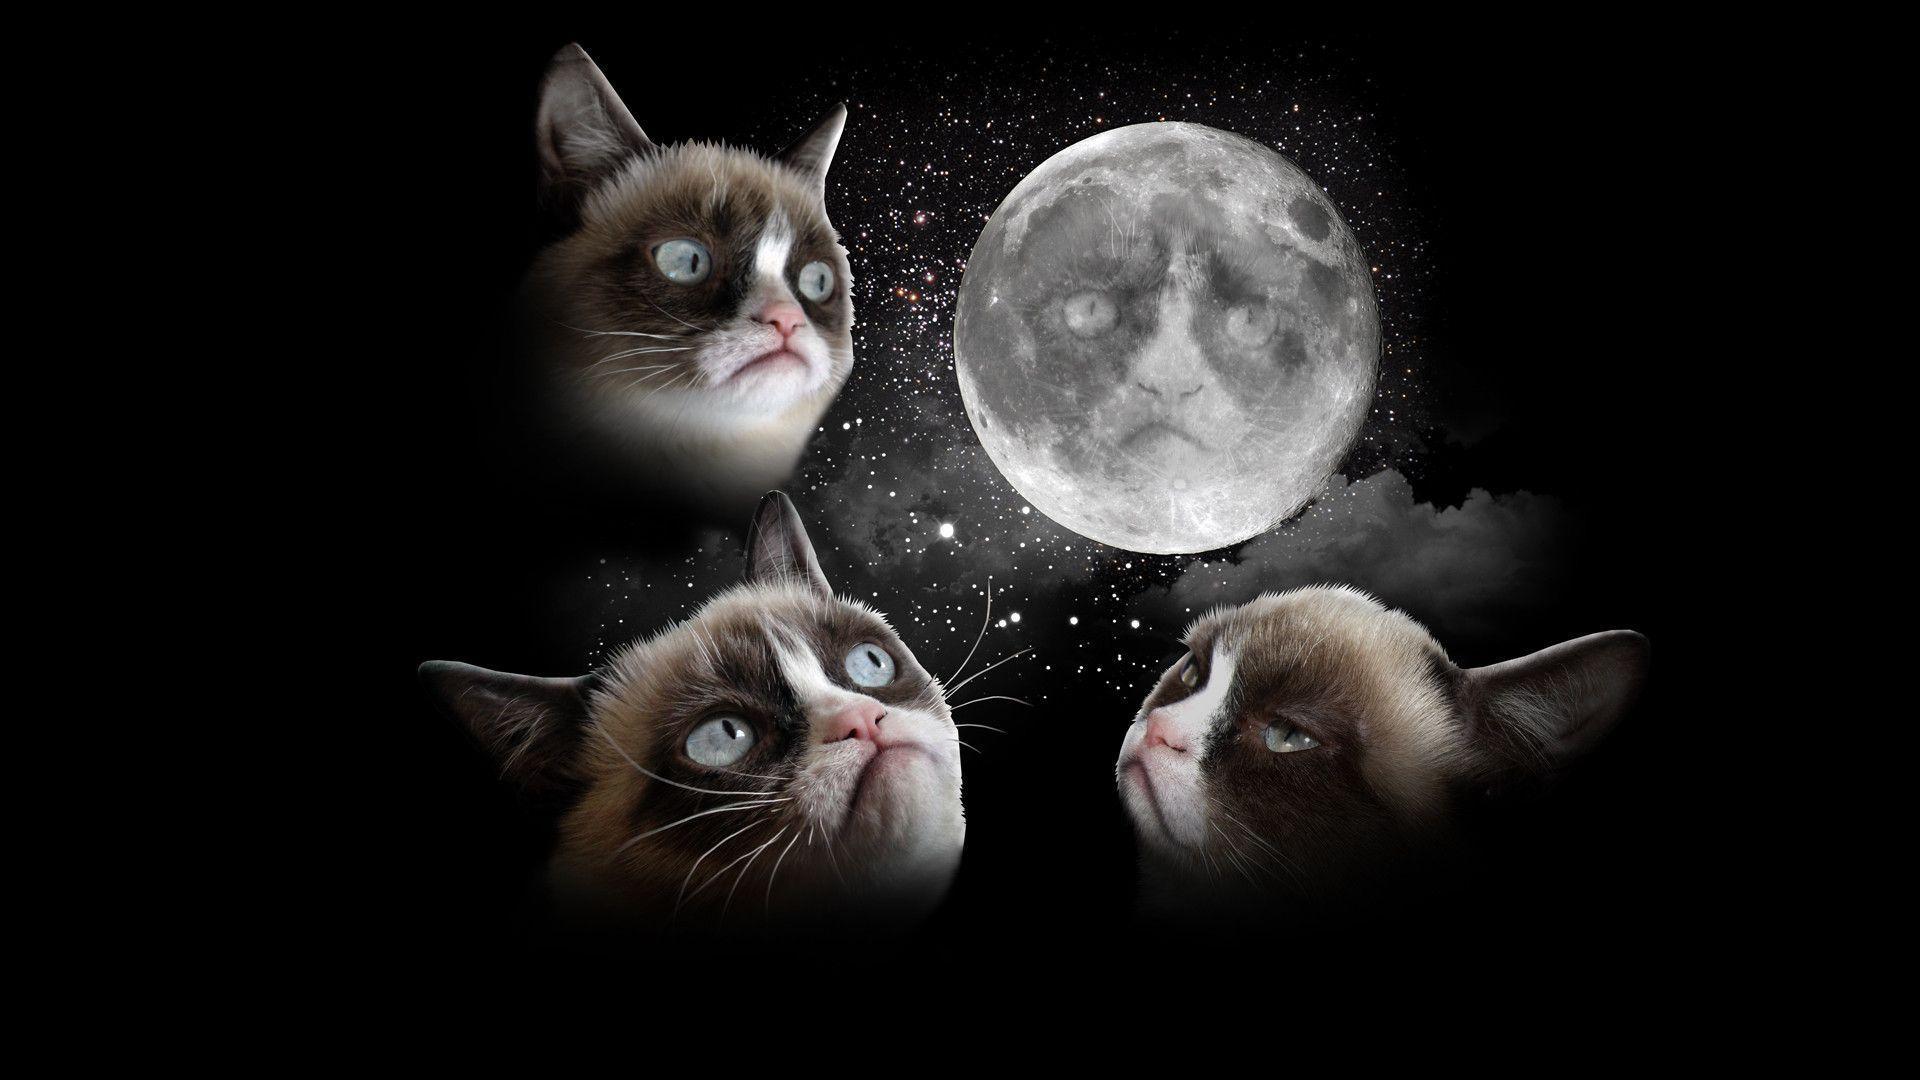 Wallpaper For > Grumpy Cat iPhone Wallpaper